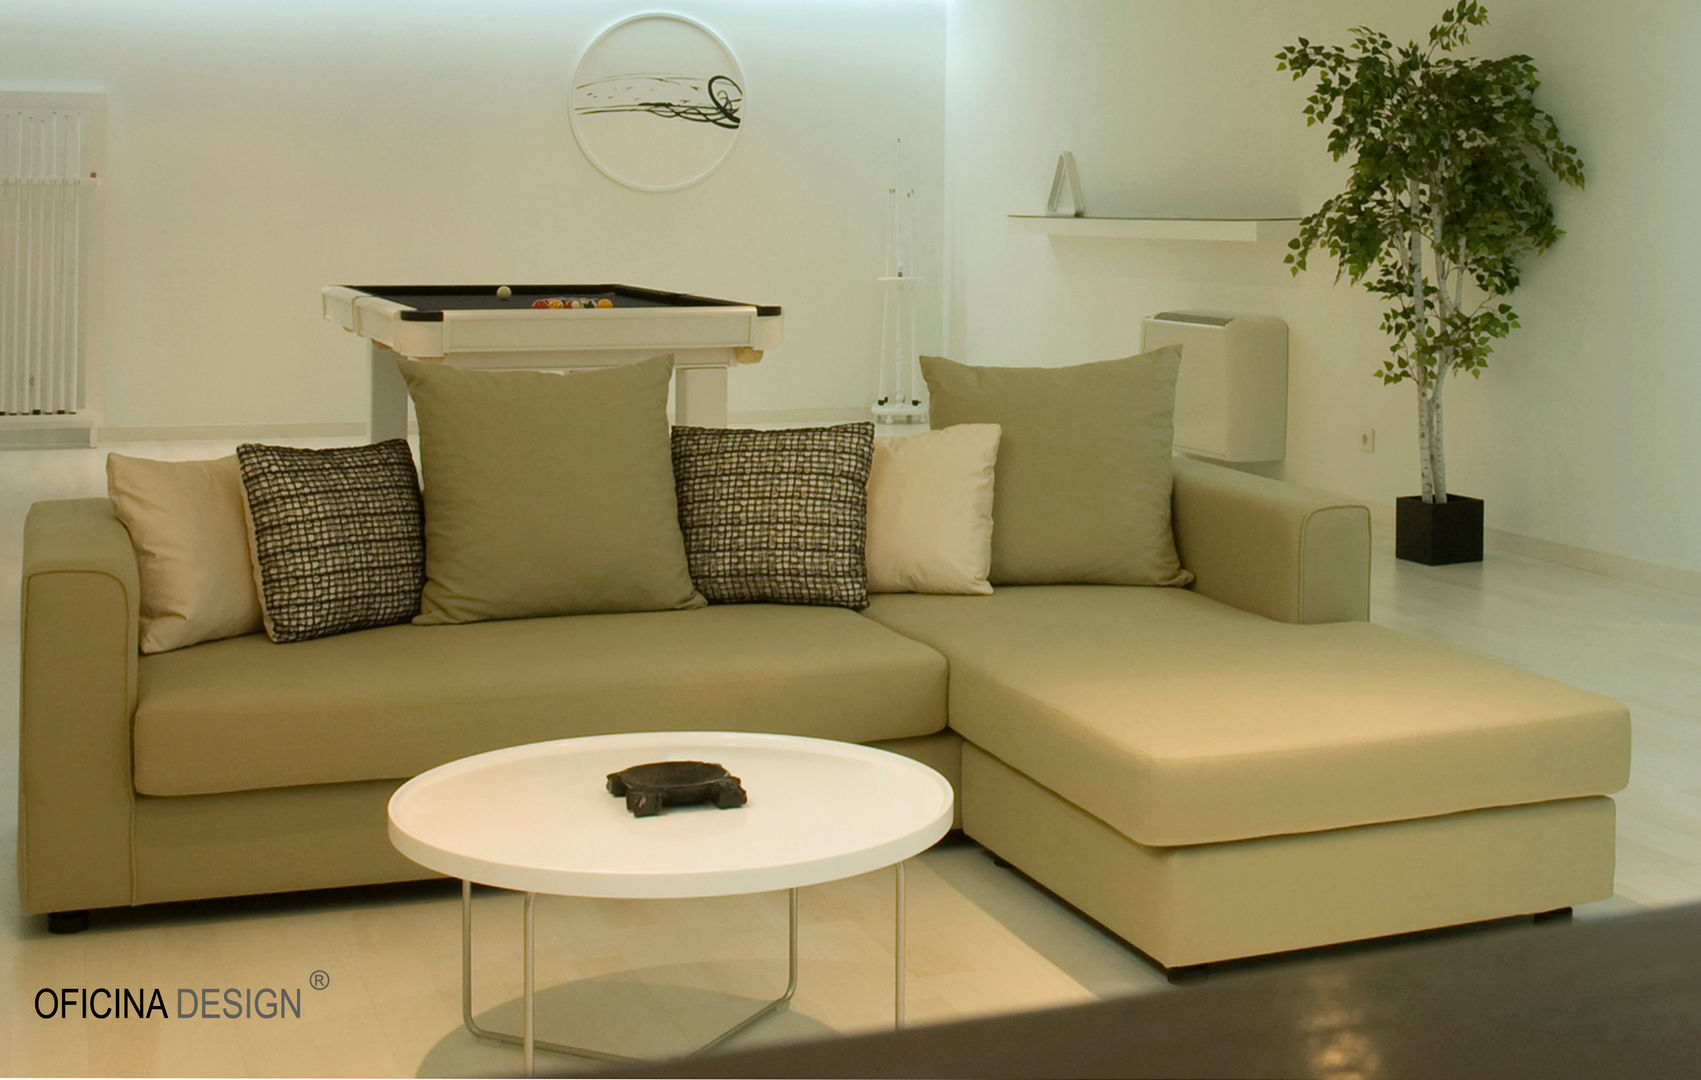 Casa - Freedom, Oficina Design Oficina Design Minimalist living room